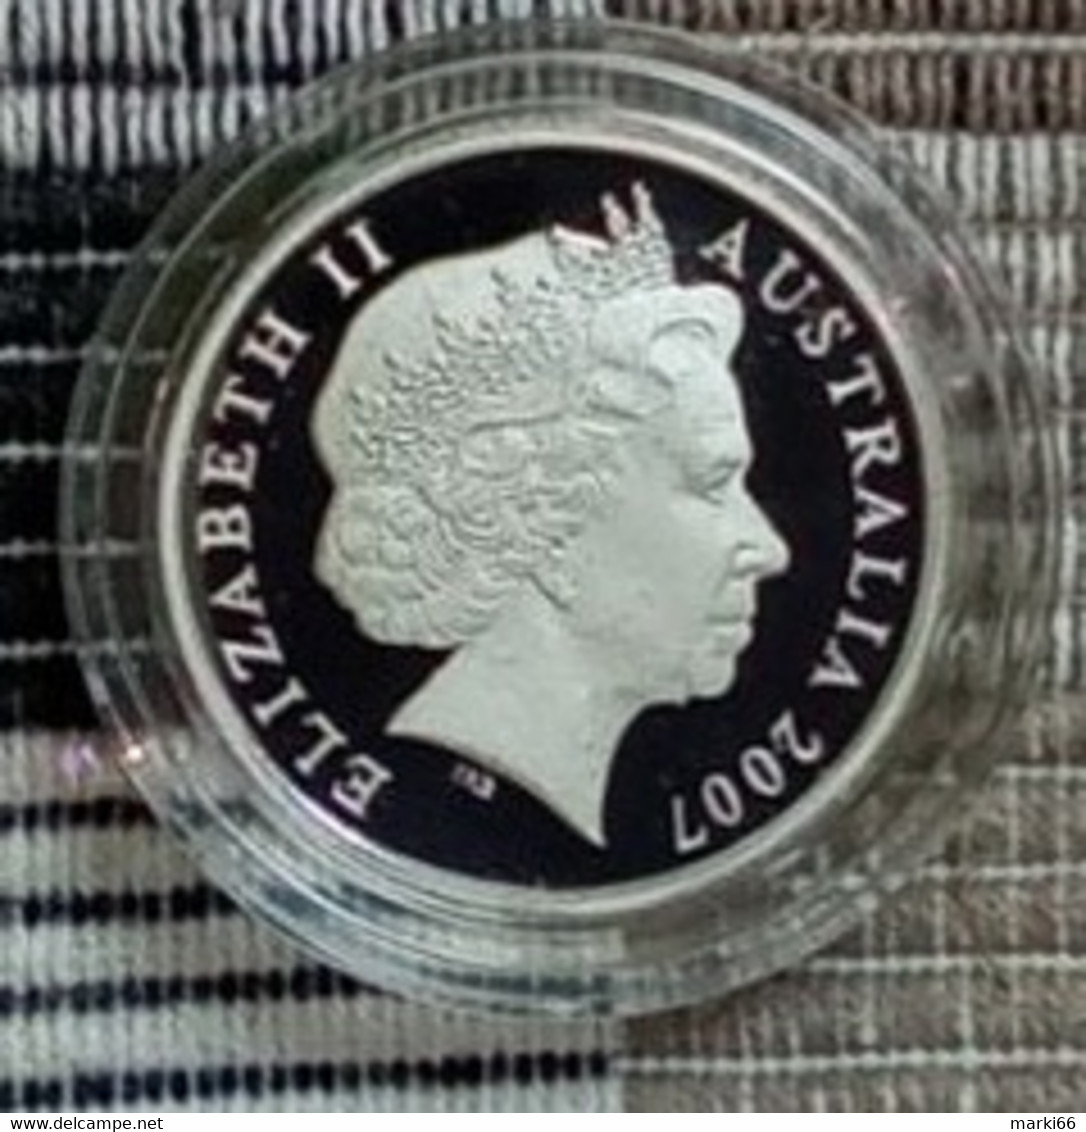 Australia - 2007 - Sydney Harbour Bridge - 75th Anniversary - 1 Dollar Fine Silver Proof Coin - Mint Sets & Proof Sets